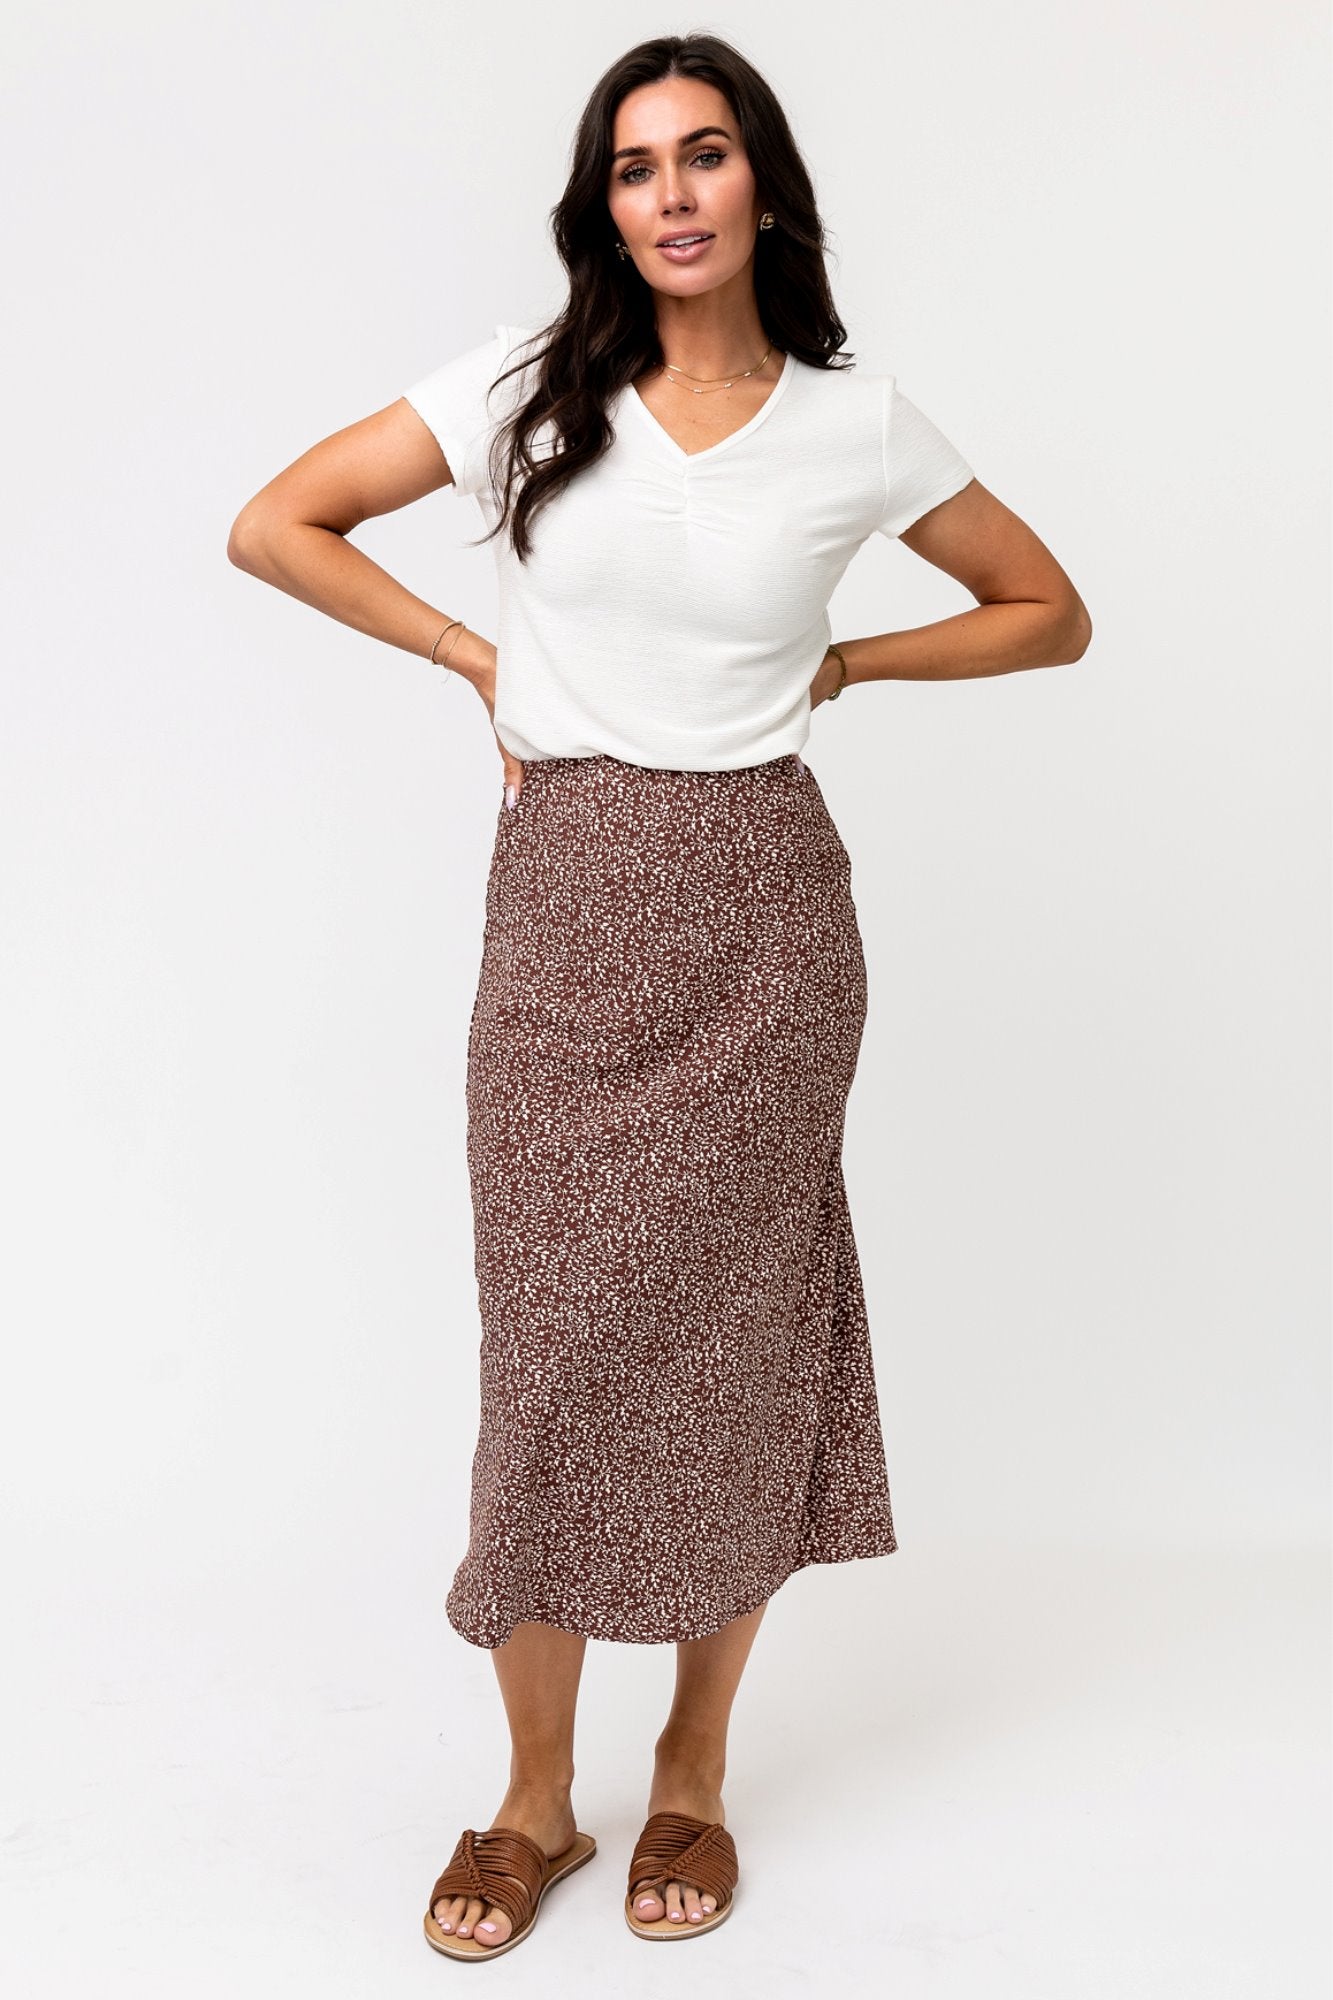 Kinsley Skirt in Brown Clothing Holley Girl 